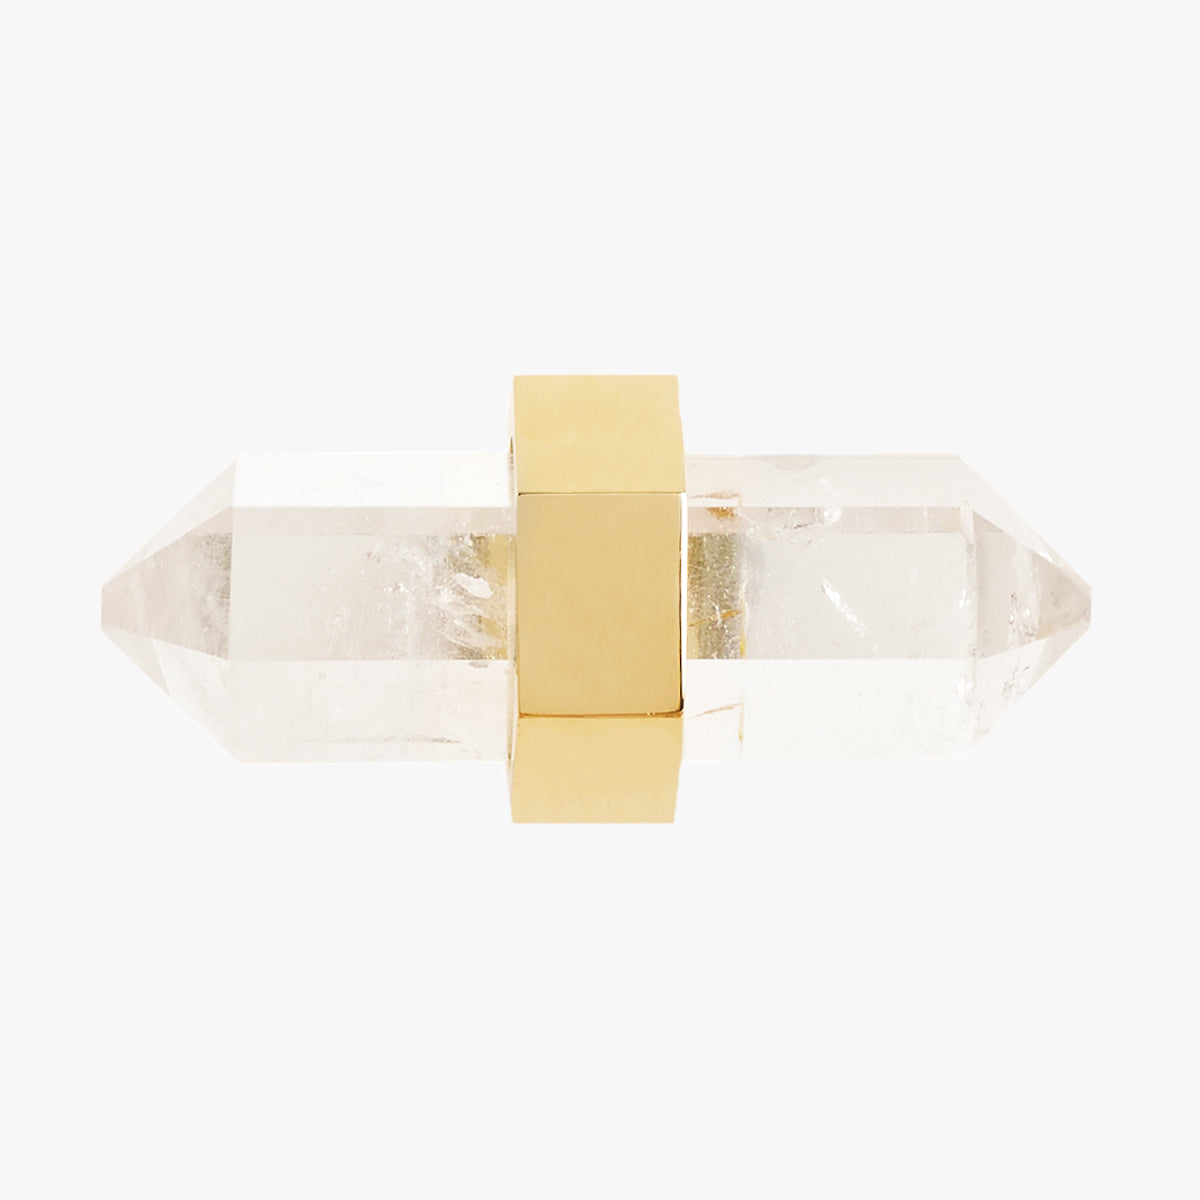 Freya Knob/Pull handmade in clear quartz crystal and polished brass by Matthew Studios